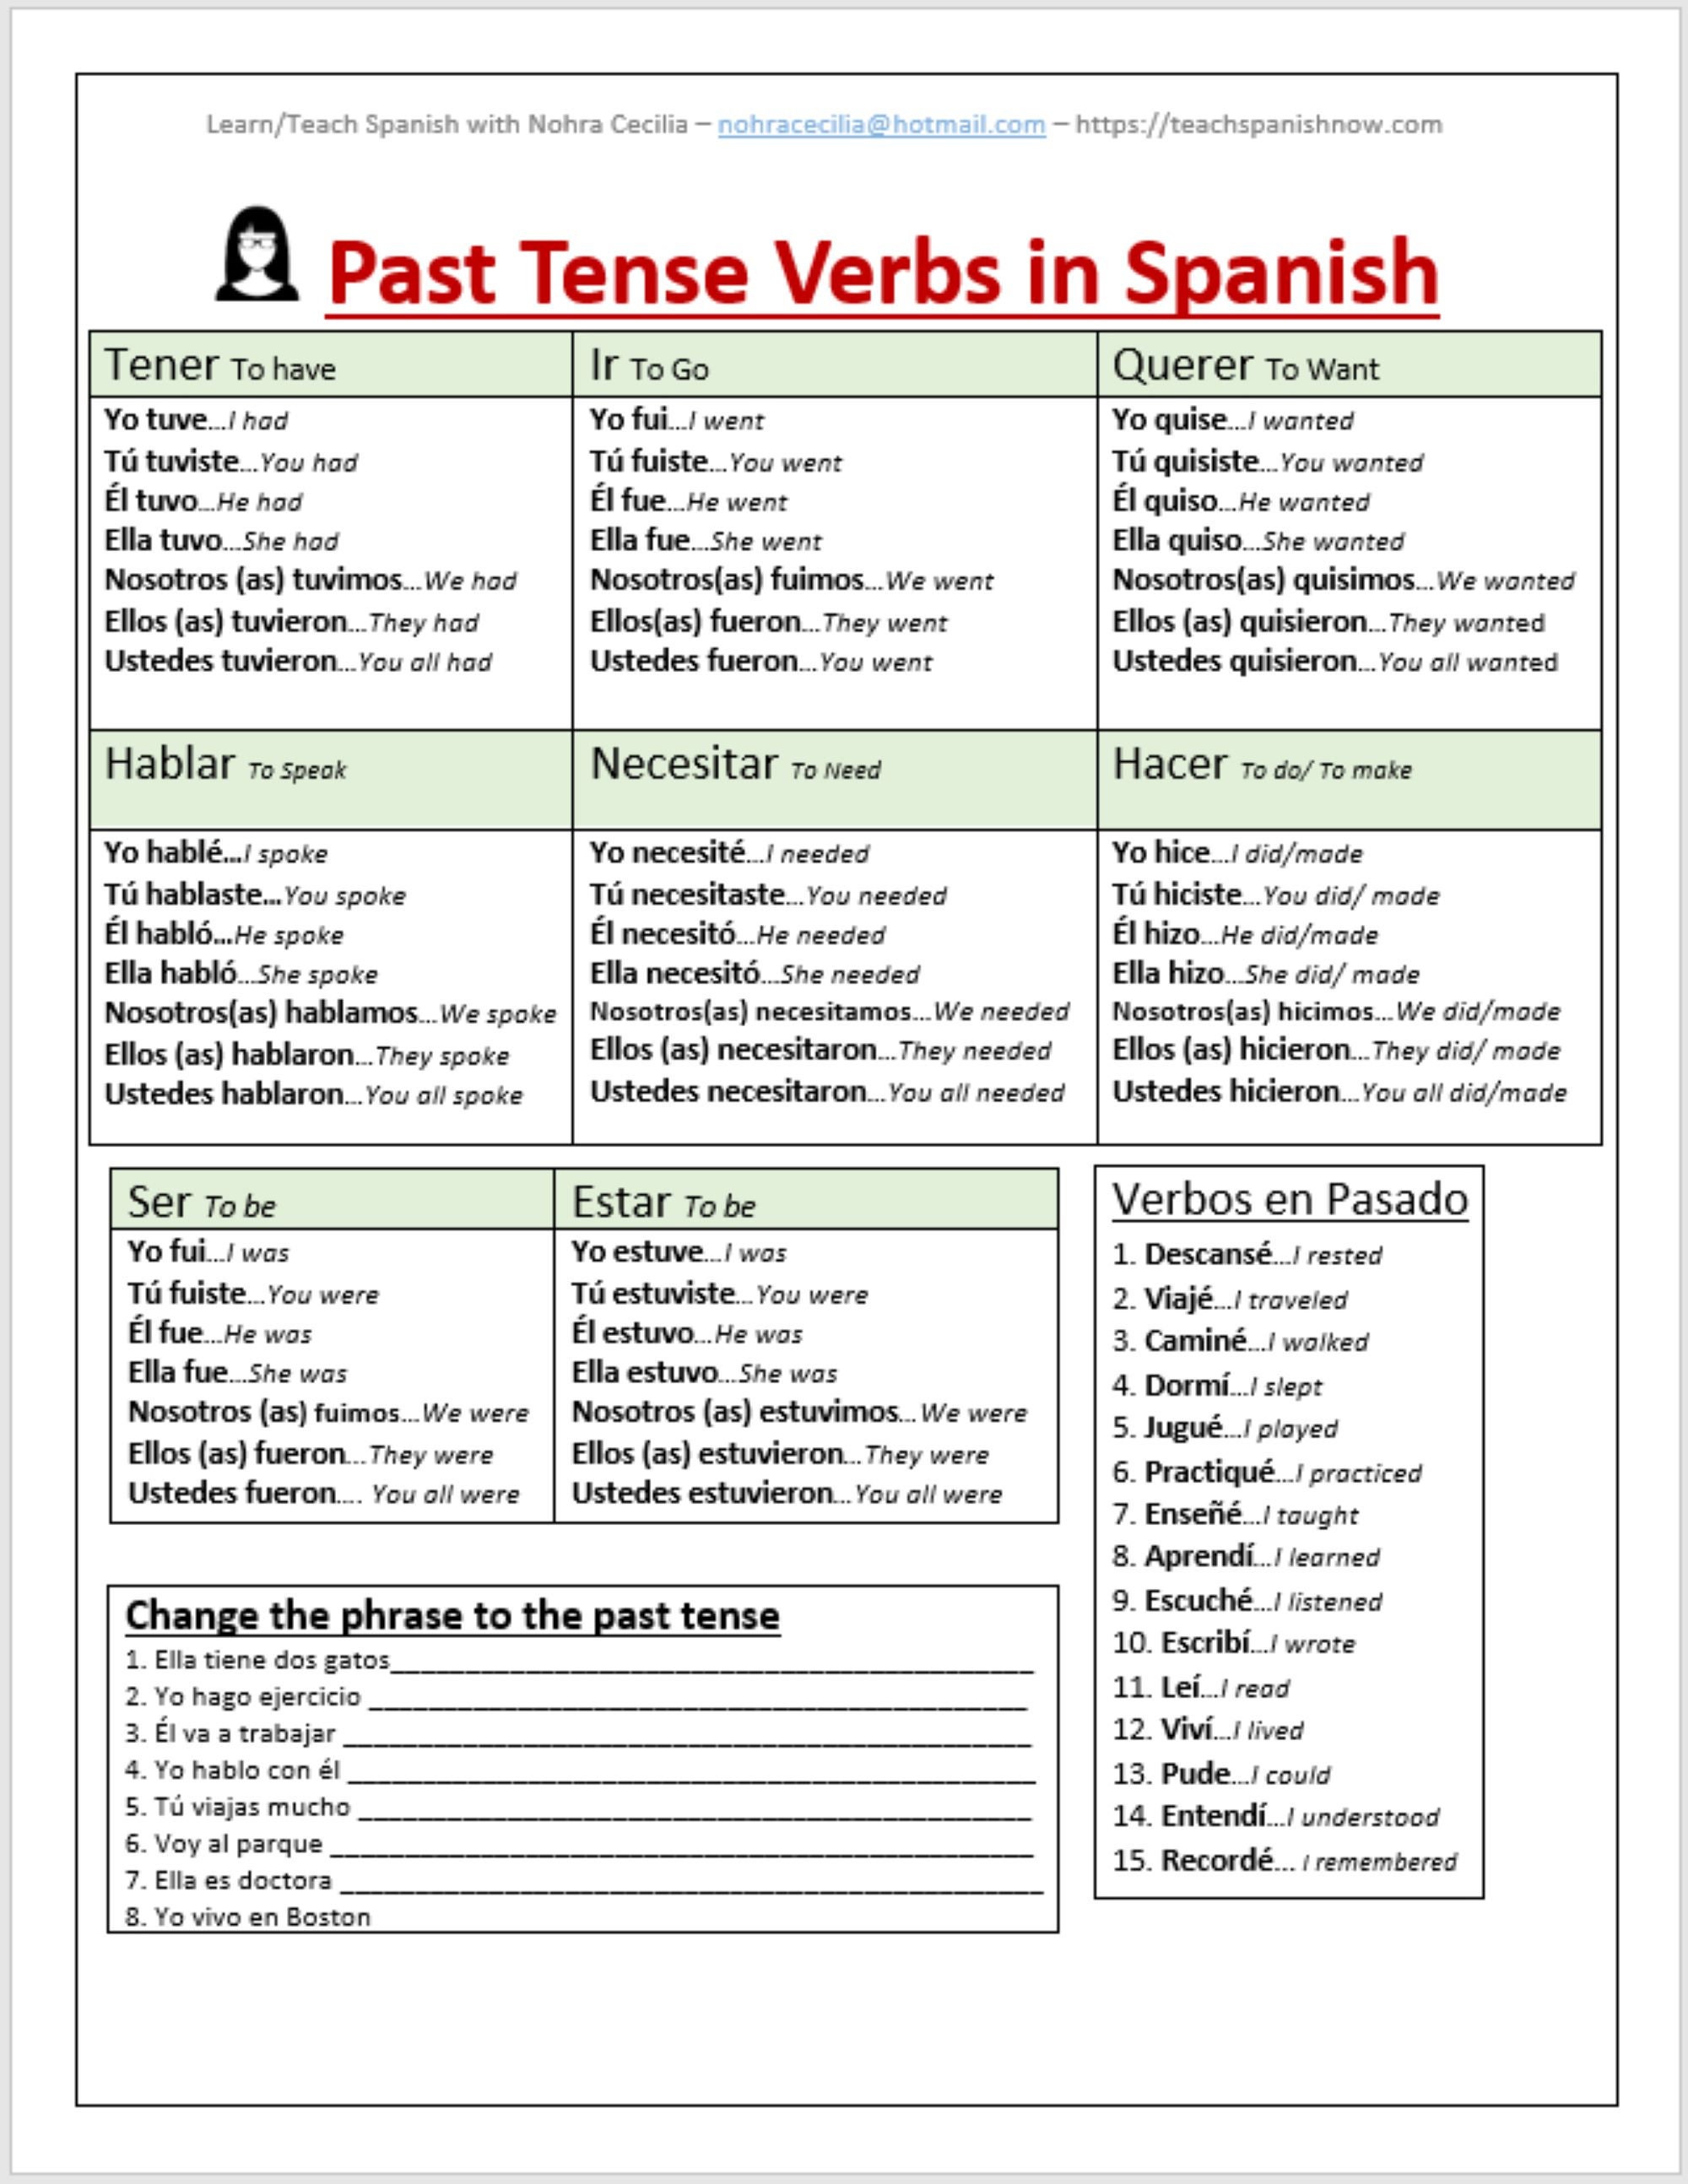 Past Tense Verbs in Spanish - Etsy UK